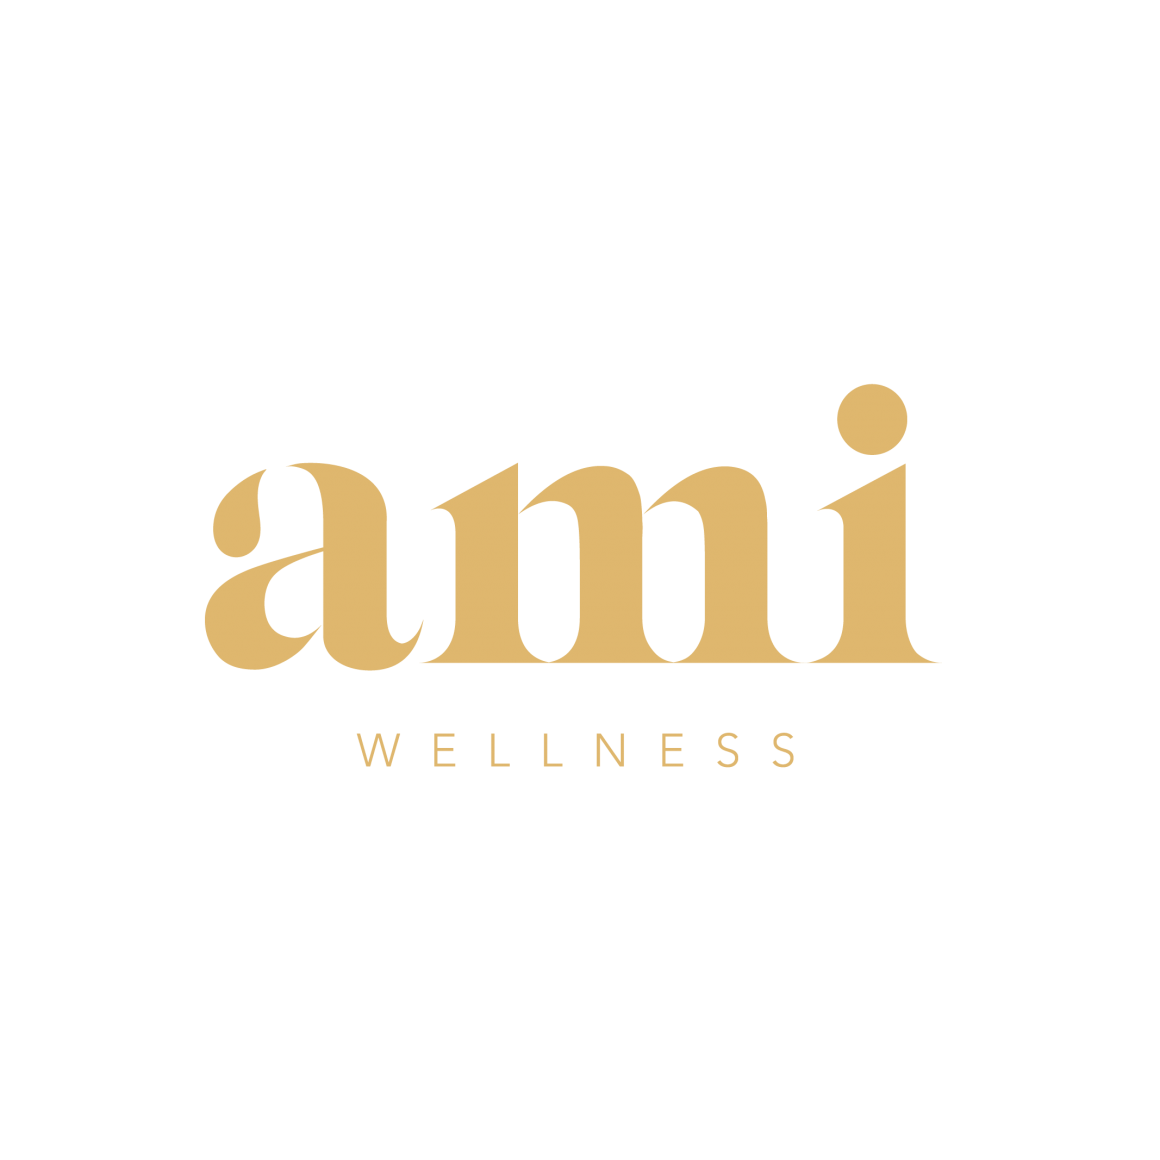 Ami Wellness and Bonvera 